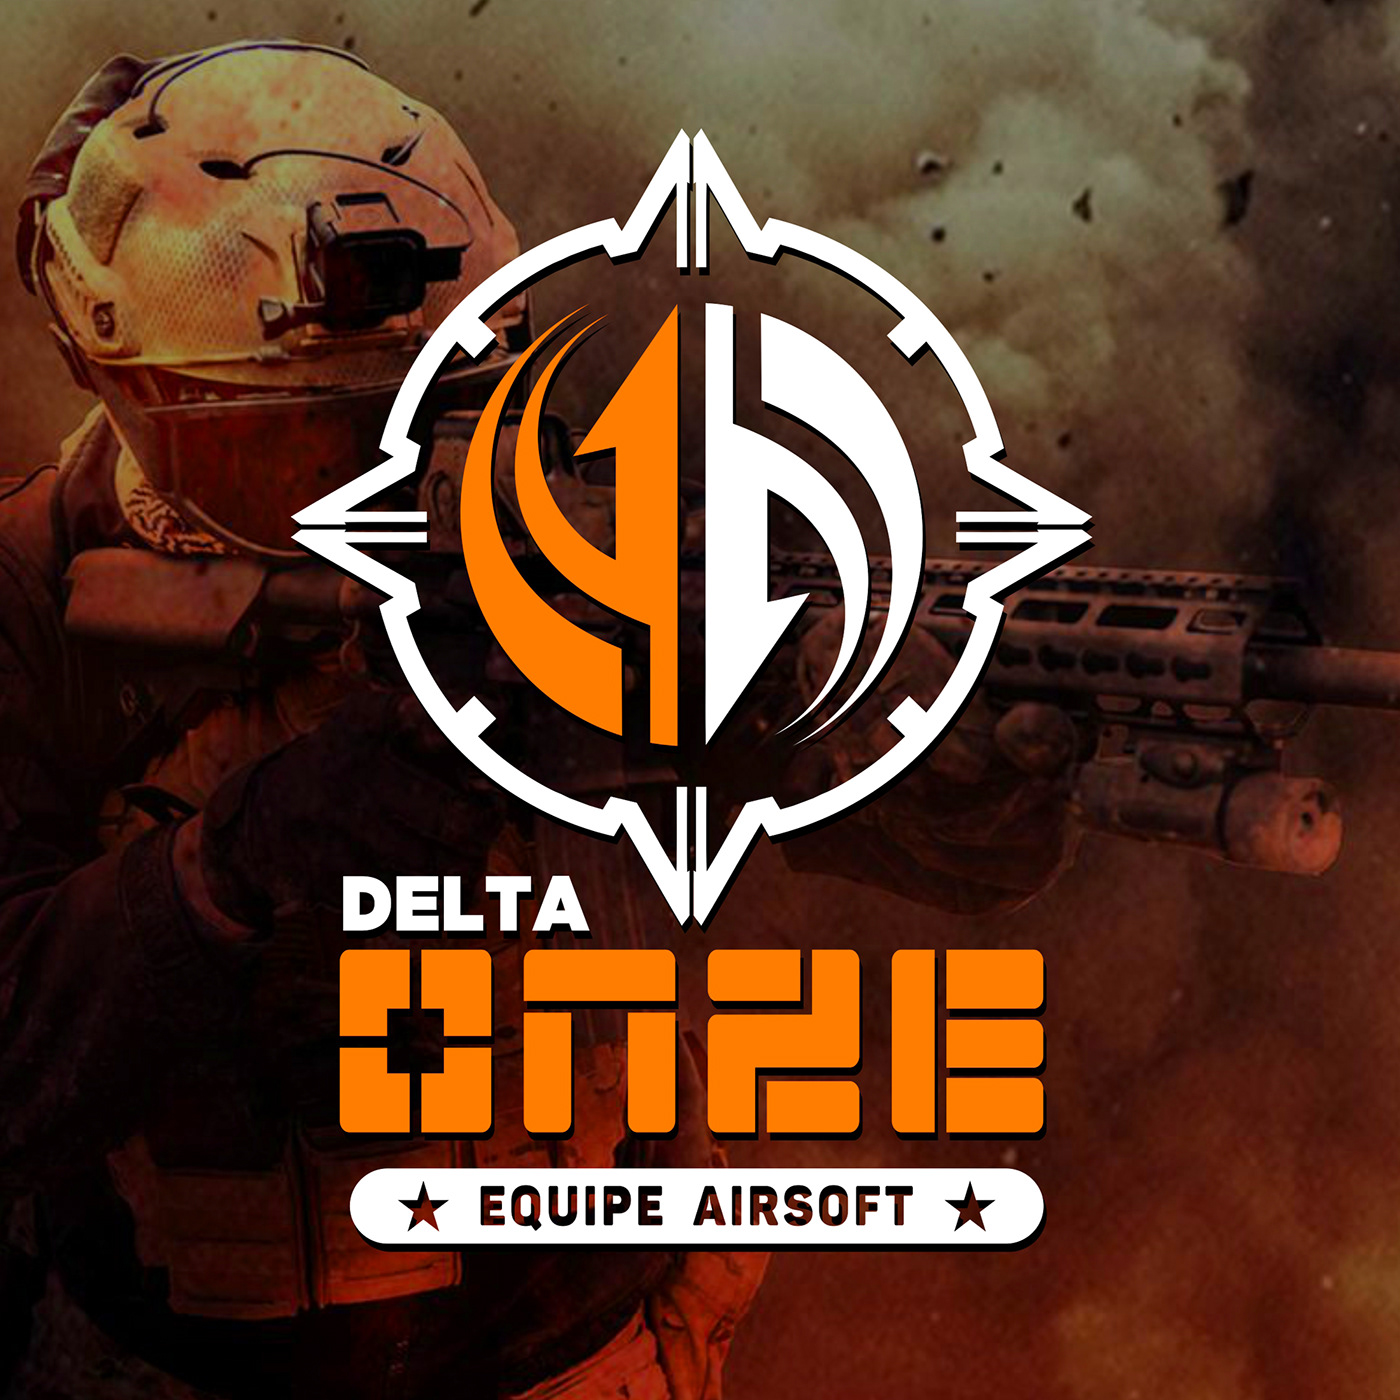 Airsoft army Brasil Delta design game logo Patrol soldier tatical